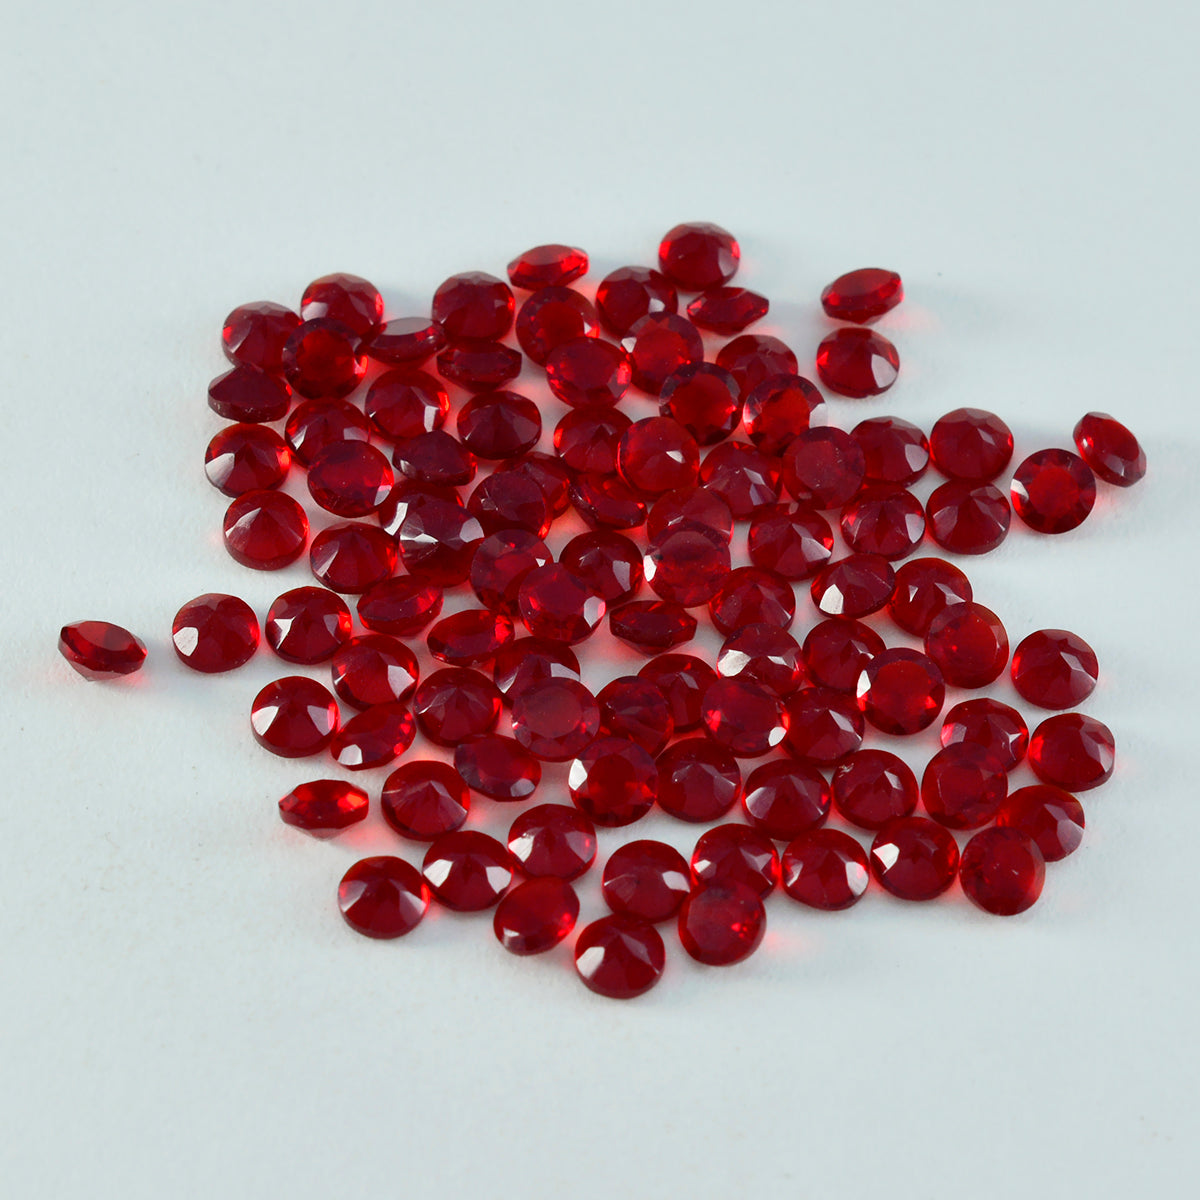 Riyogems 1PC Red Ruby CZ Faceted 3x3 mm Round Shape A+ Quality Gems